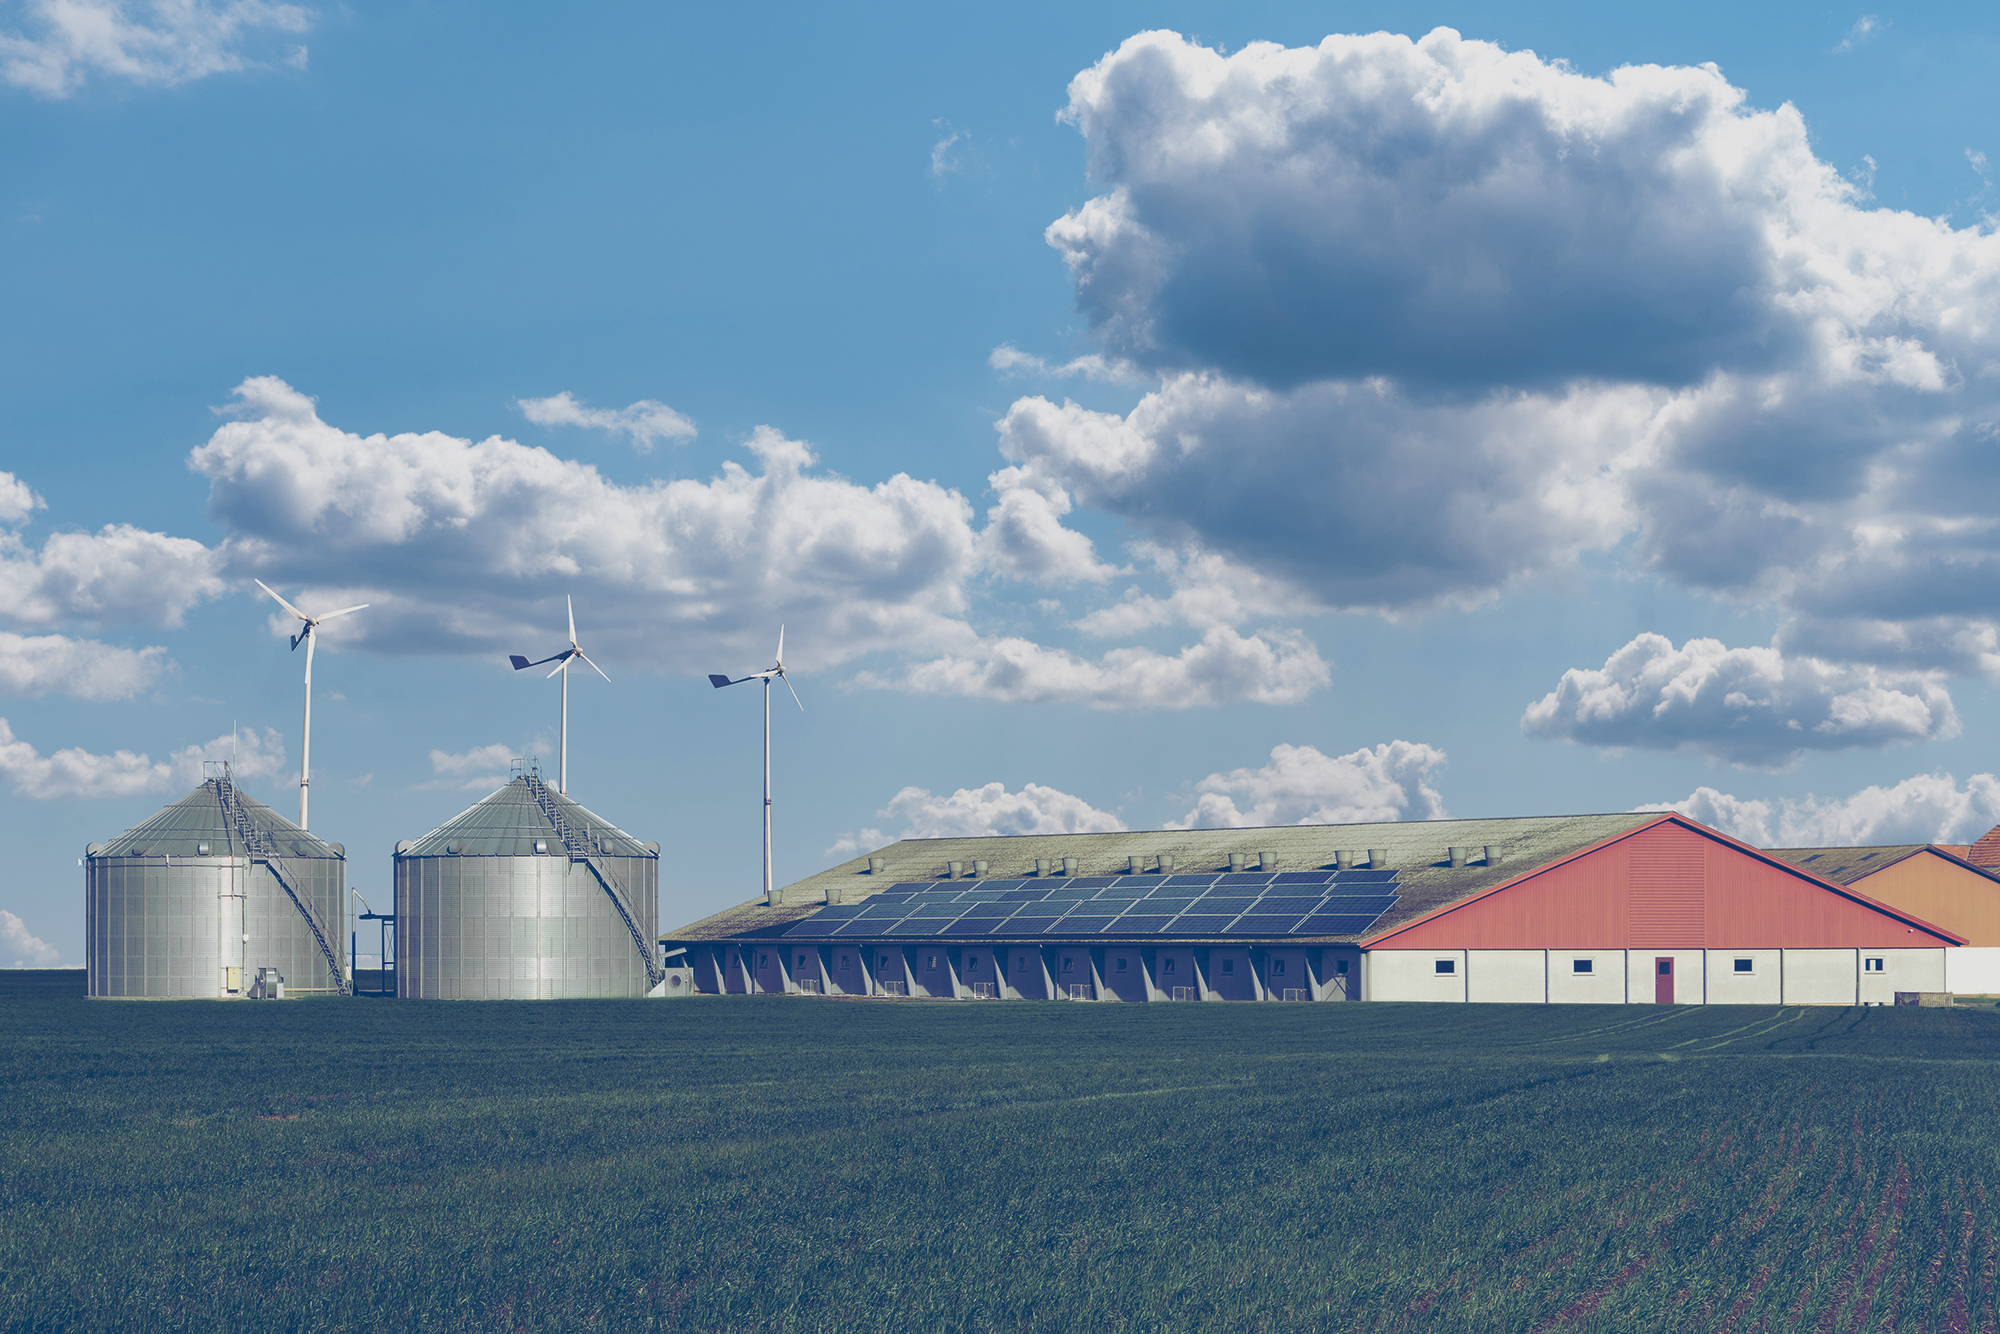 Dairy farm using renewable energy, solar panels and wind turbines